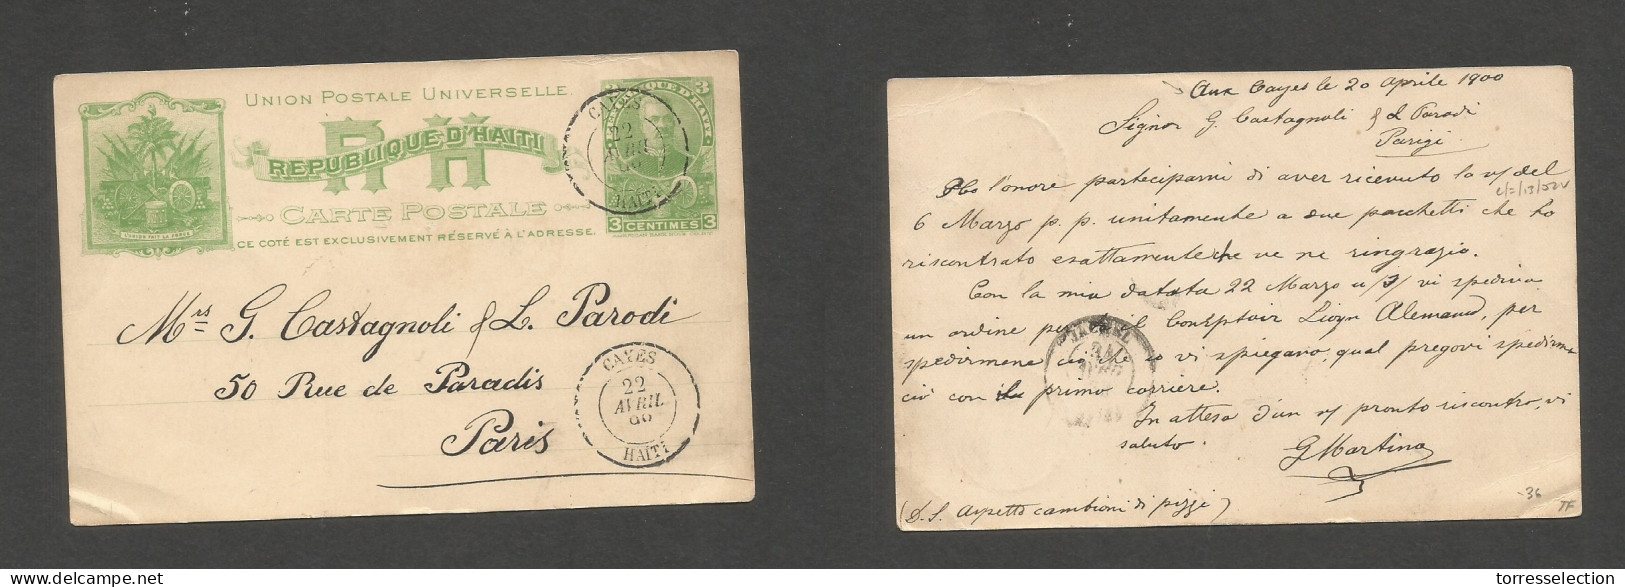 HAITI. 1900 (20 Apr) Aux Cayes - France, Paris. 3c Green Early Stat Card. Fine Used. SALE. - Haiti